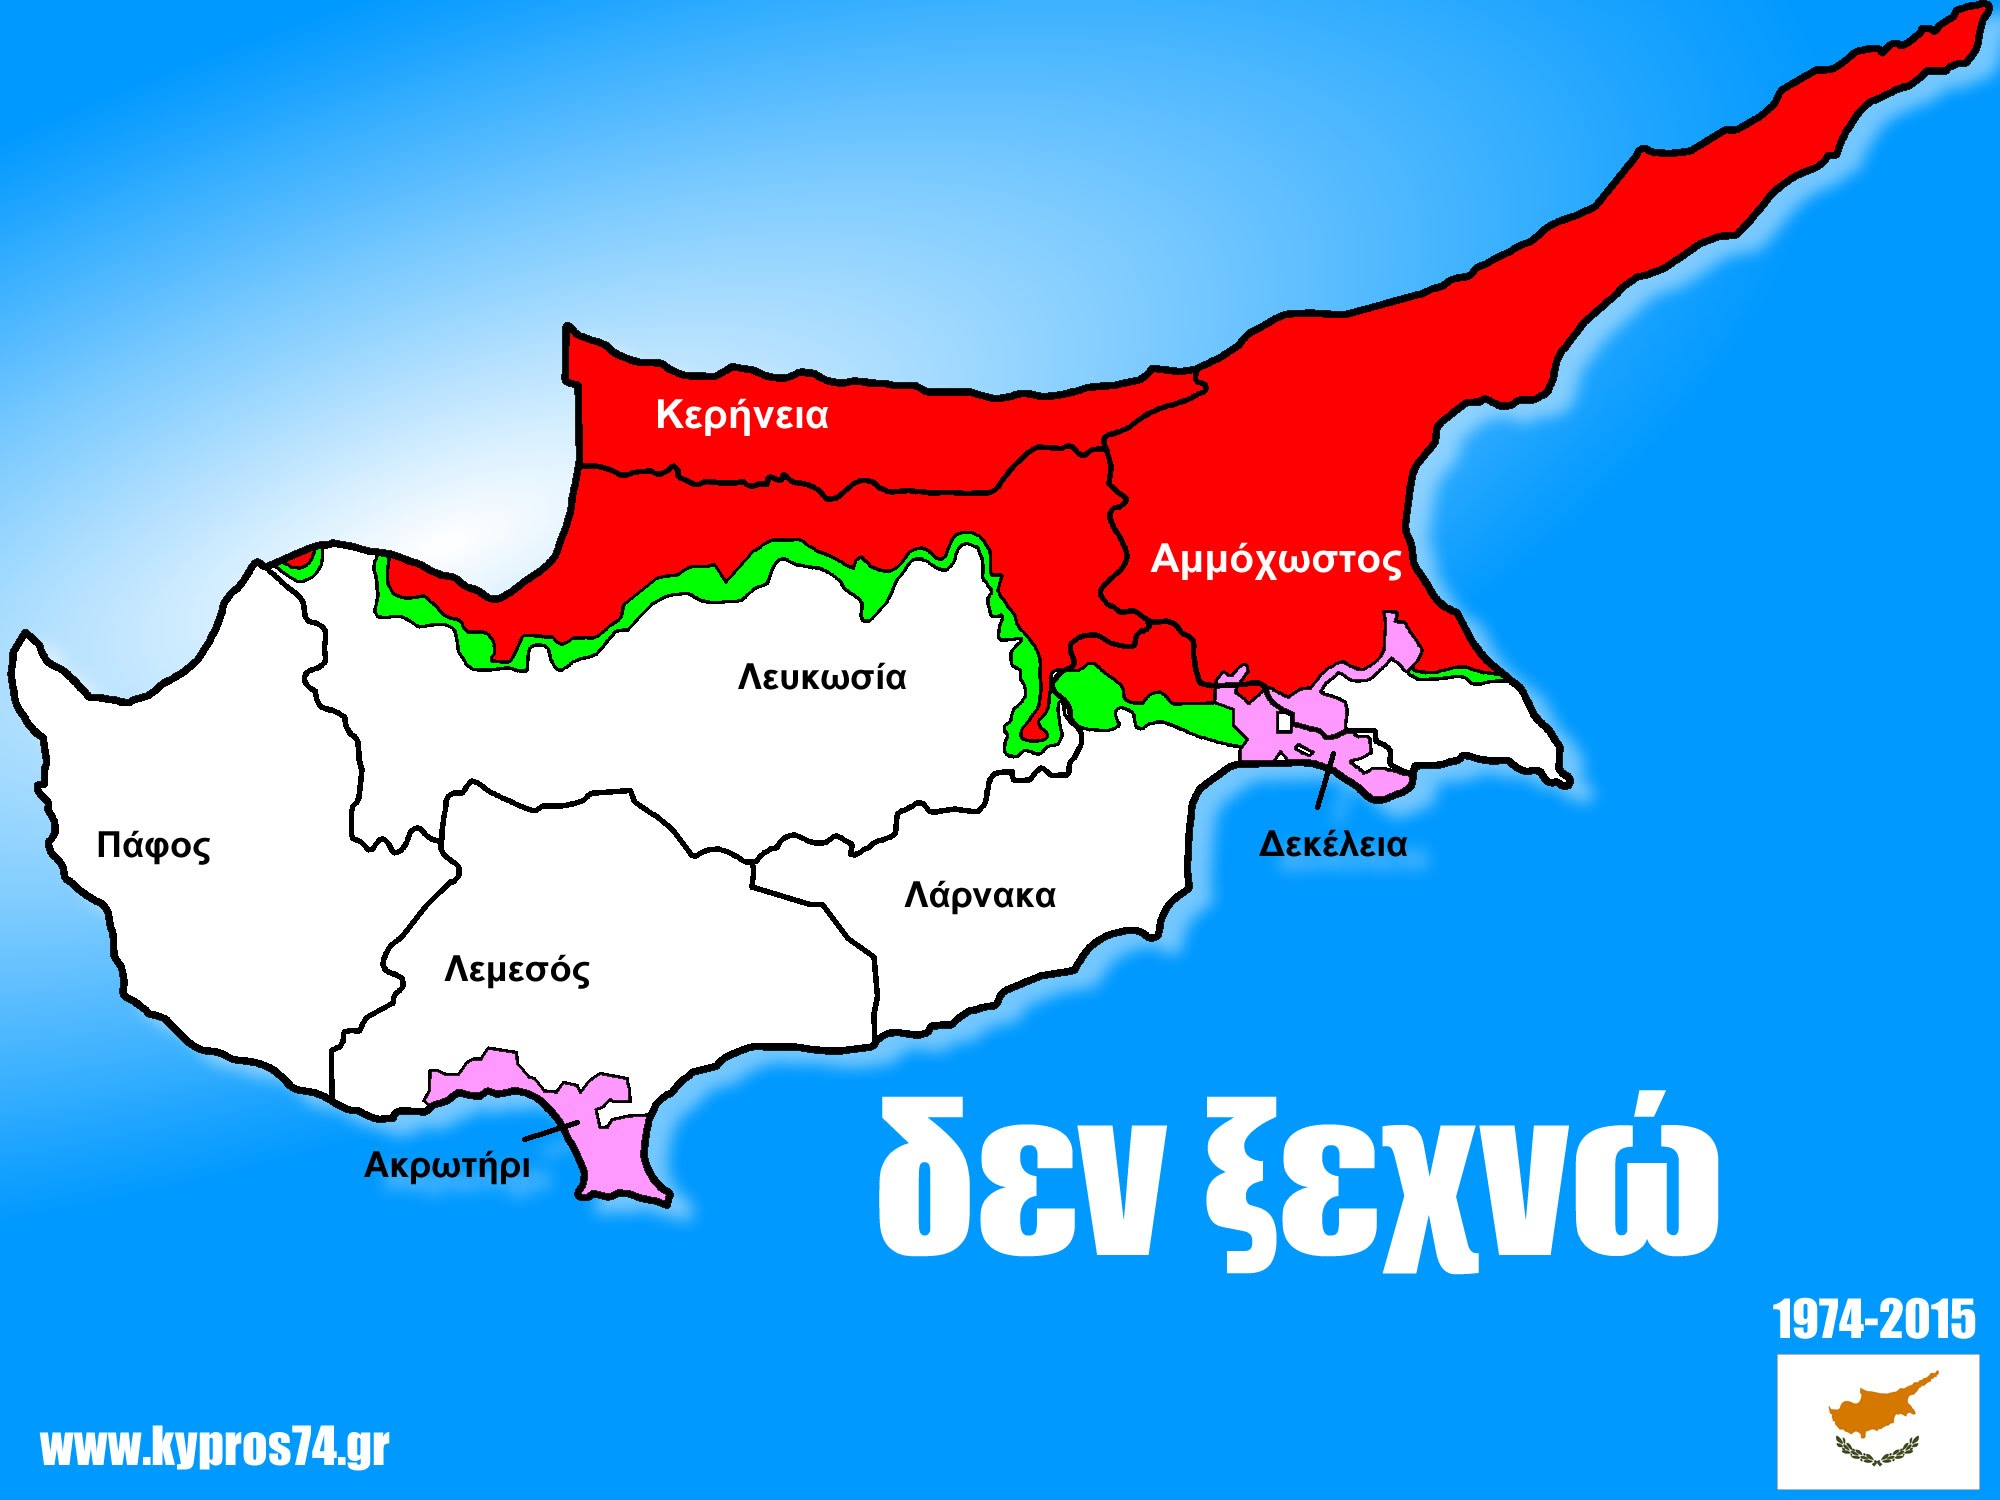 You are currently viewing Αφιέρωμα στην Ημέρα Μνήμης: Το Περί ου τιμά την Κύπρο και τους Κύπριους δημιουργούς